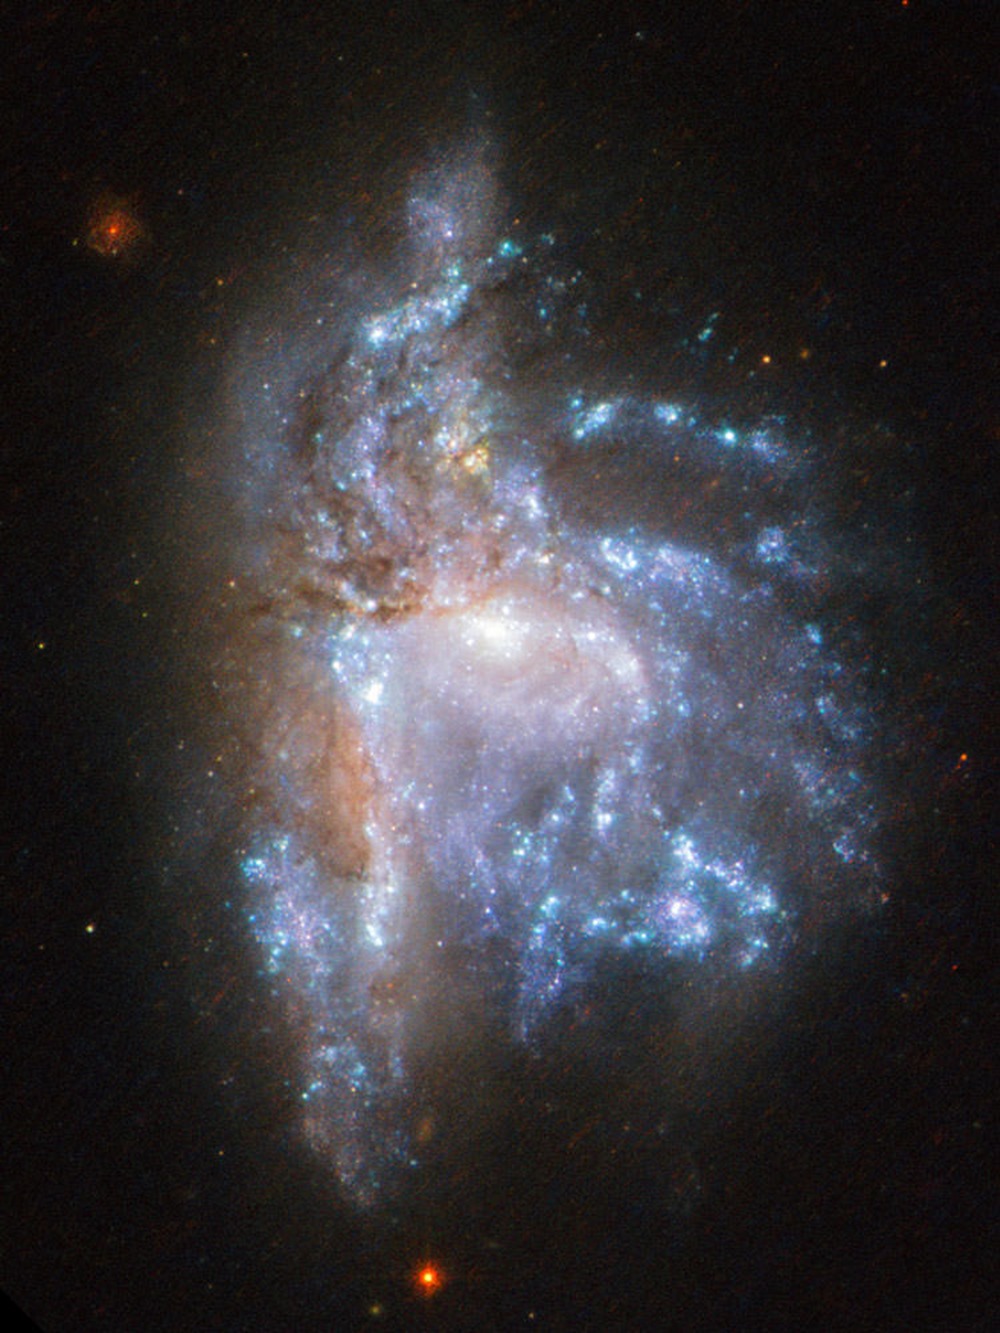 Colliding galaxies